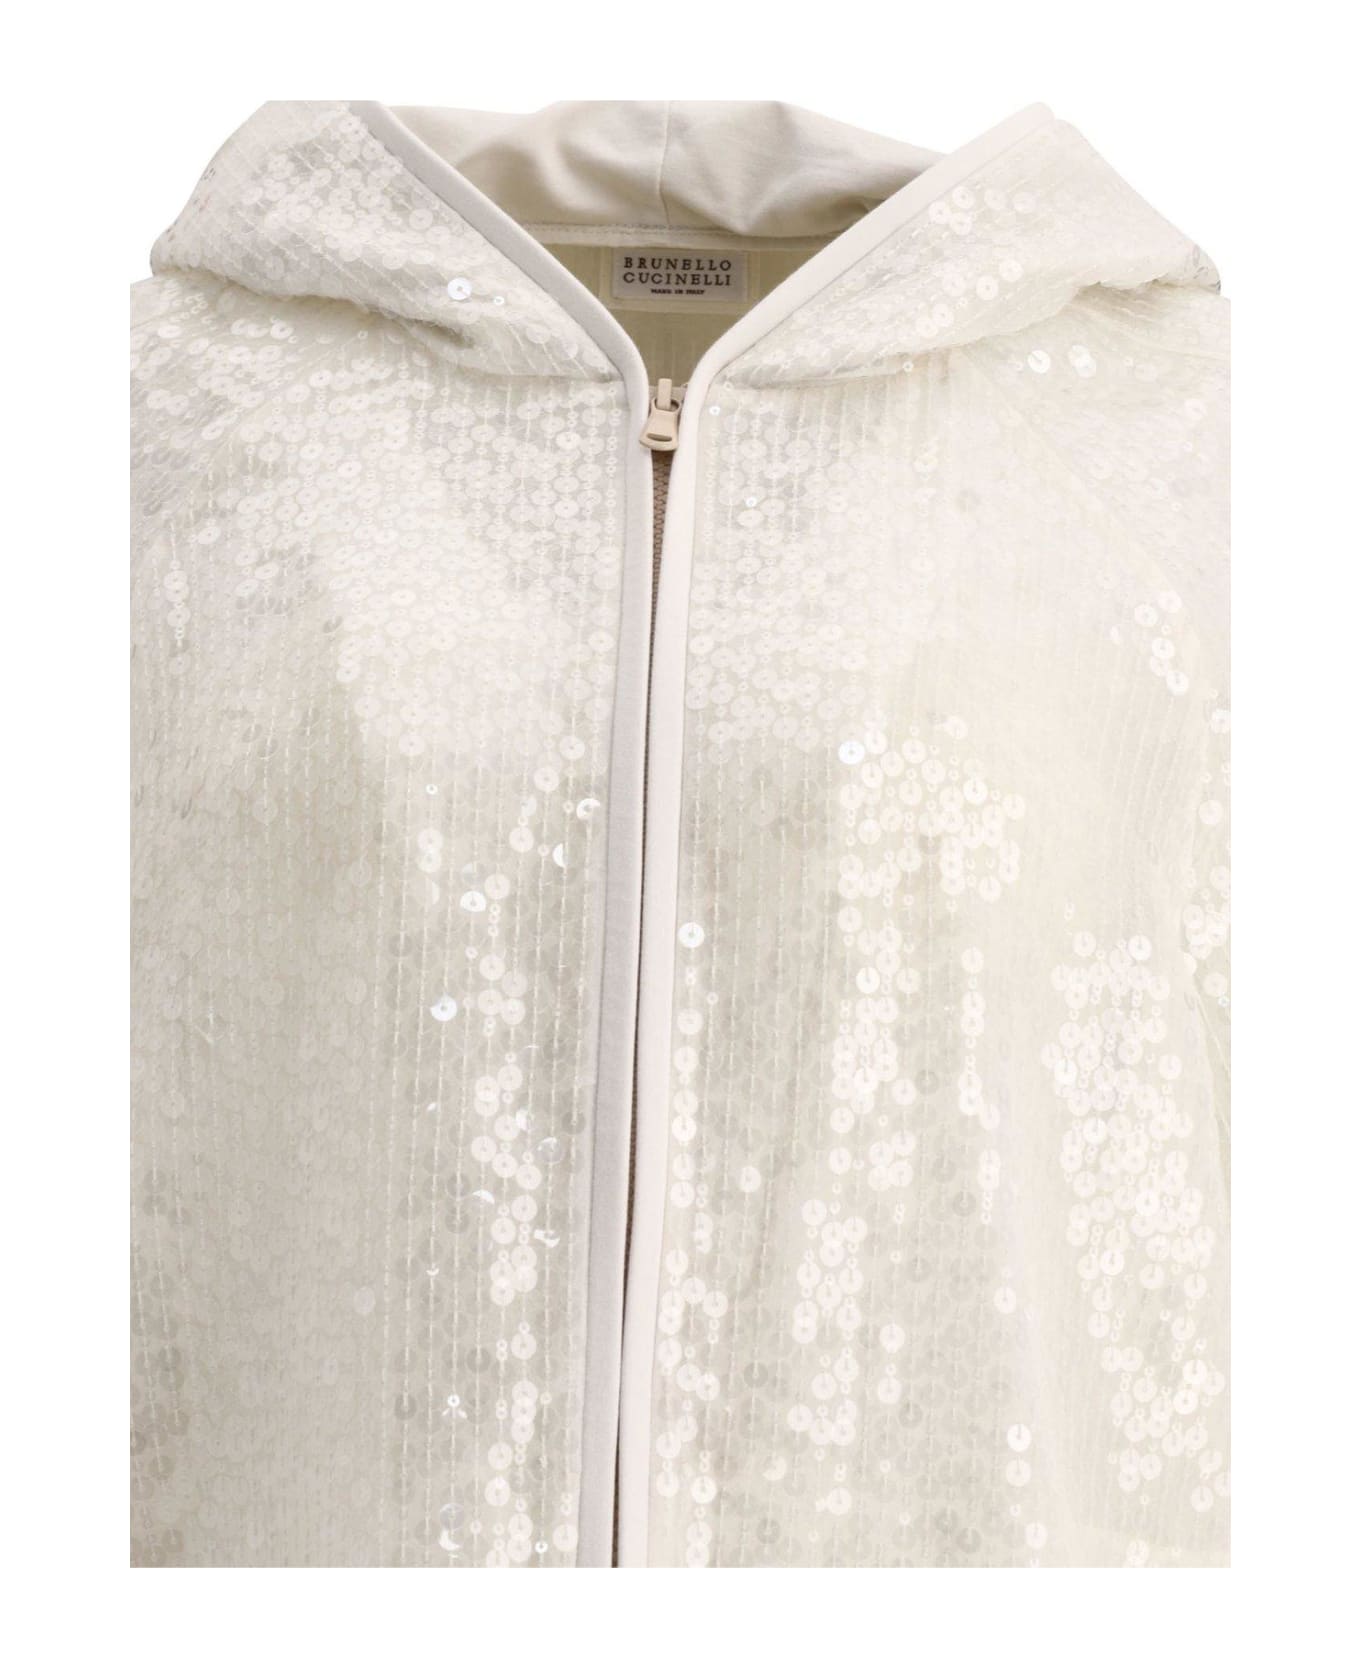 Brunello Cucinelli Dazzling Embroidery Hooded Sweater - NEUTRALS ジャケット